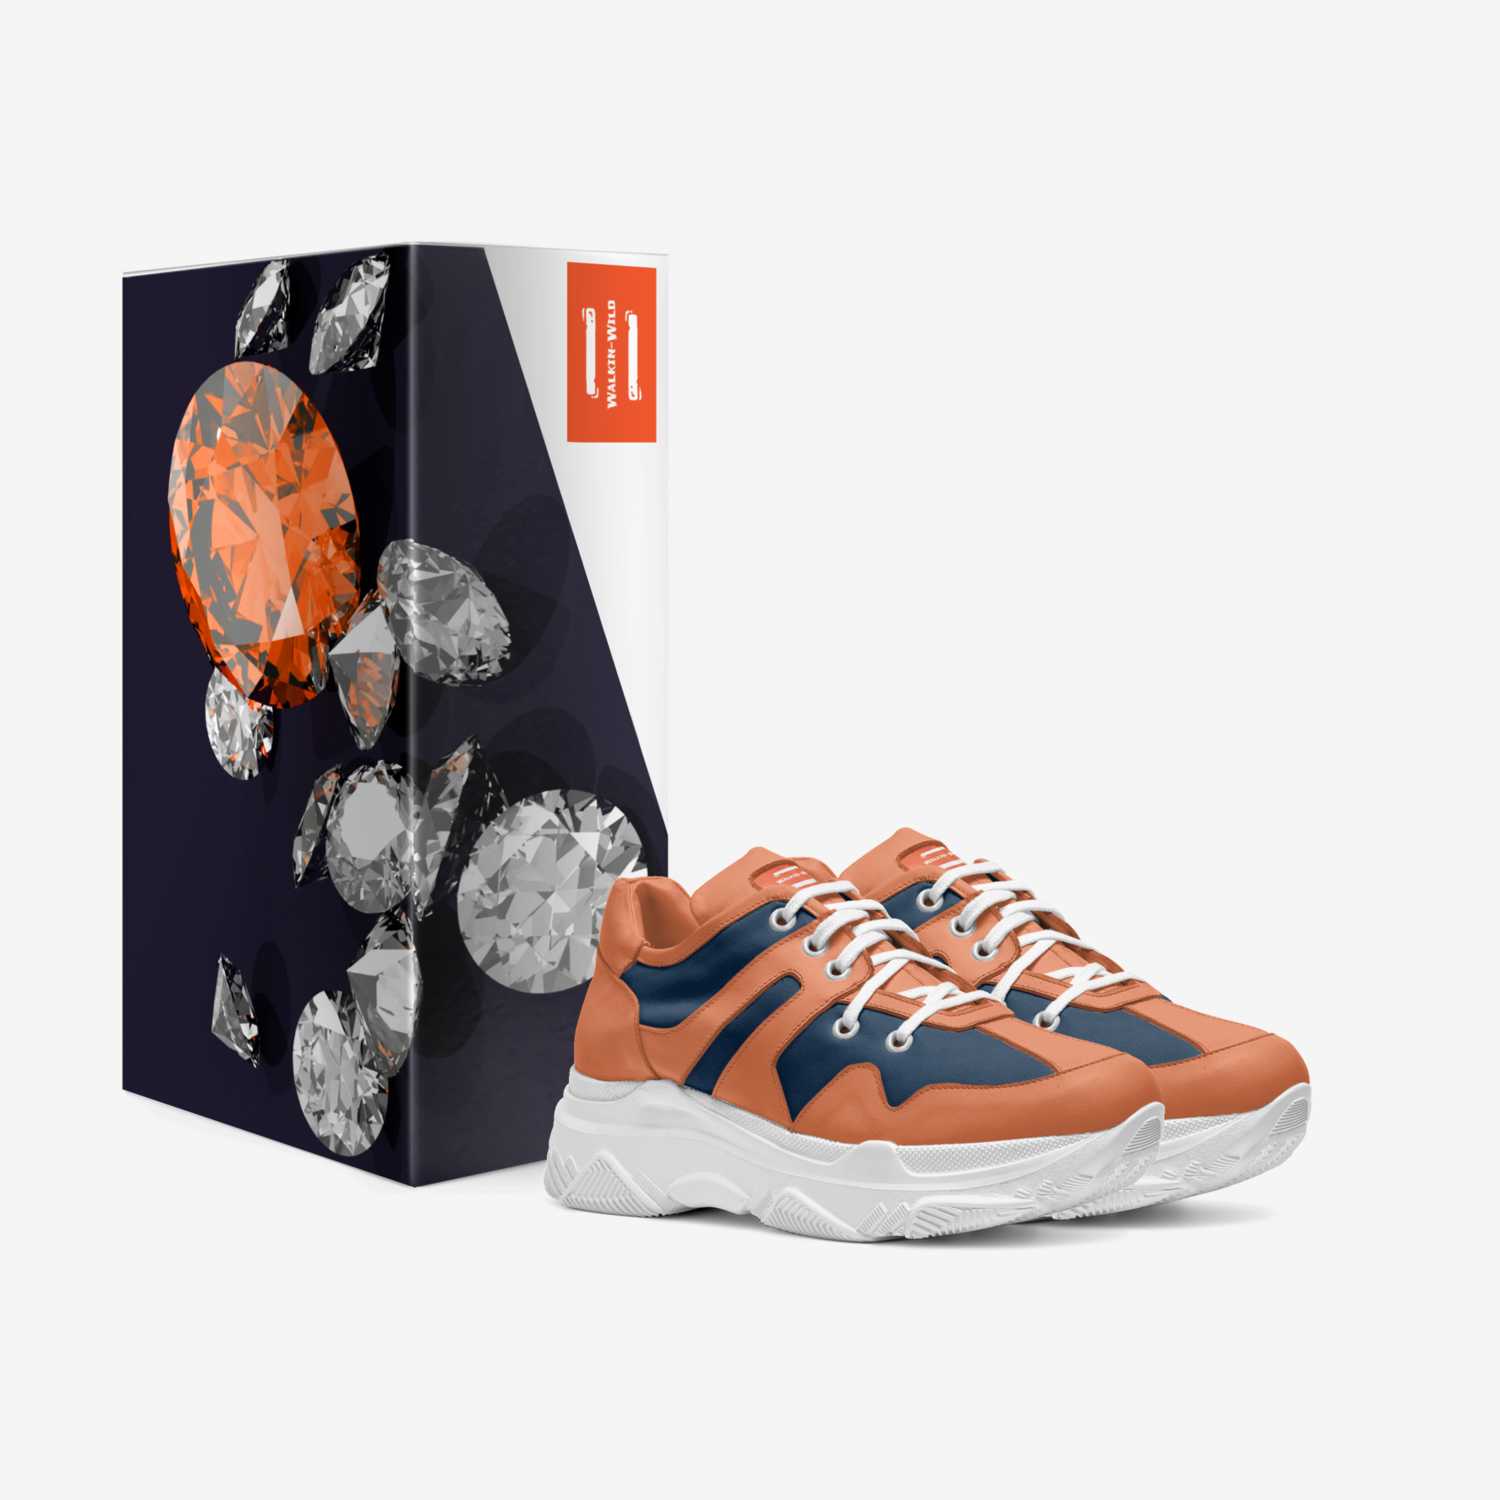 Walkin-Wild custom made in Italy shoes by Ladarius Jones | Box view